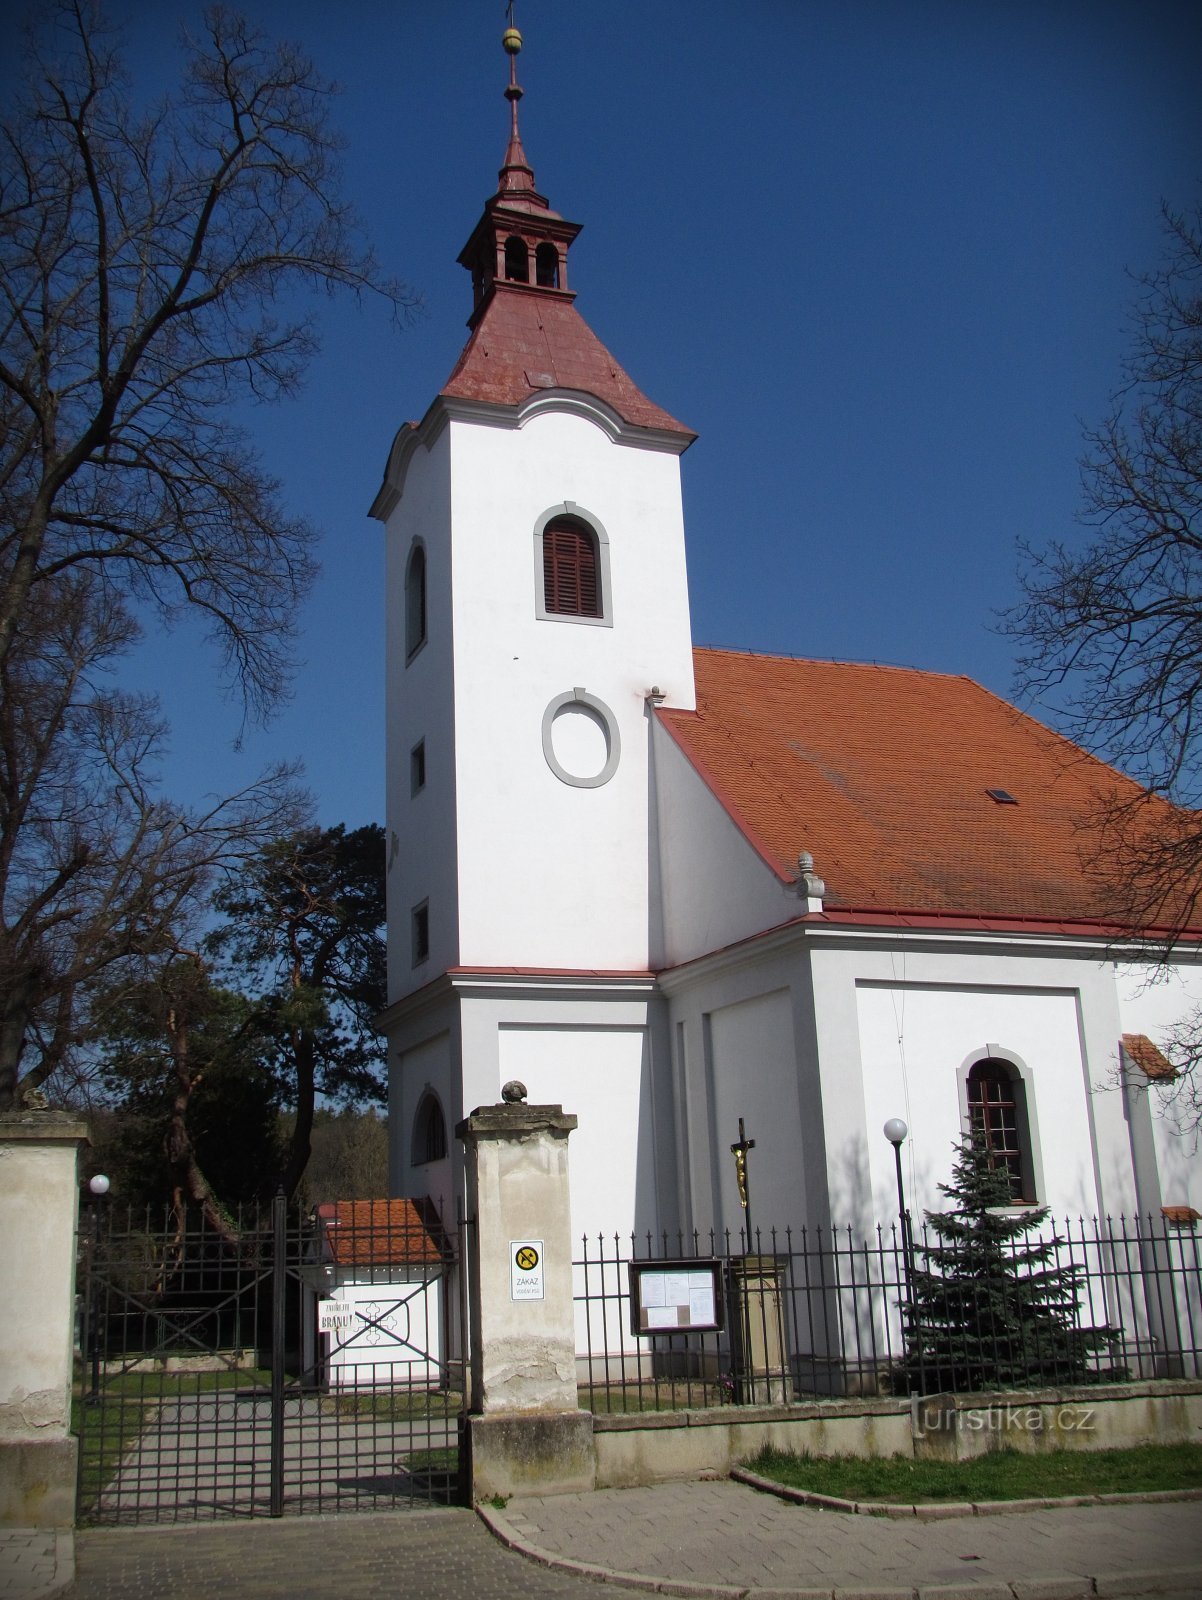 Moravský Krumlov - Biserica Tuturor Sfinților